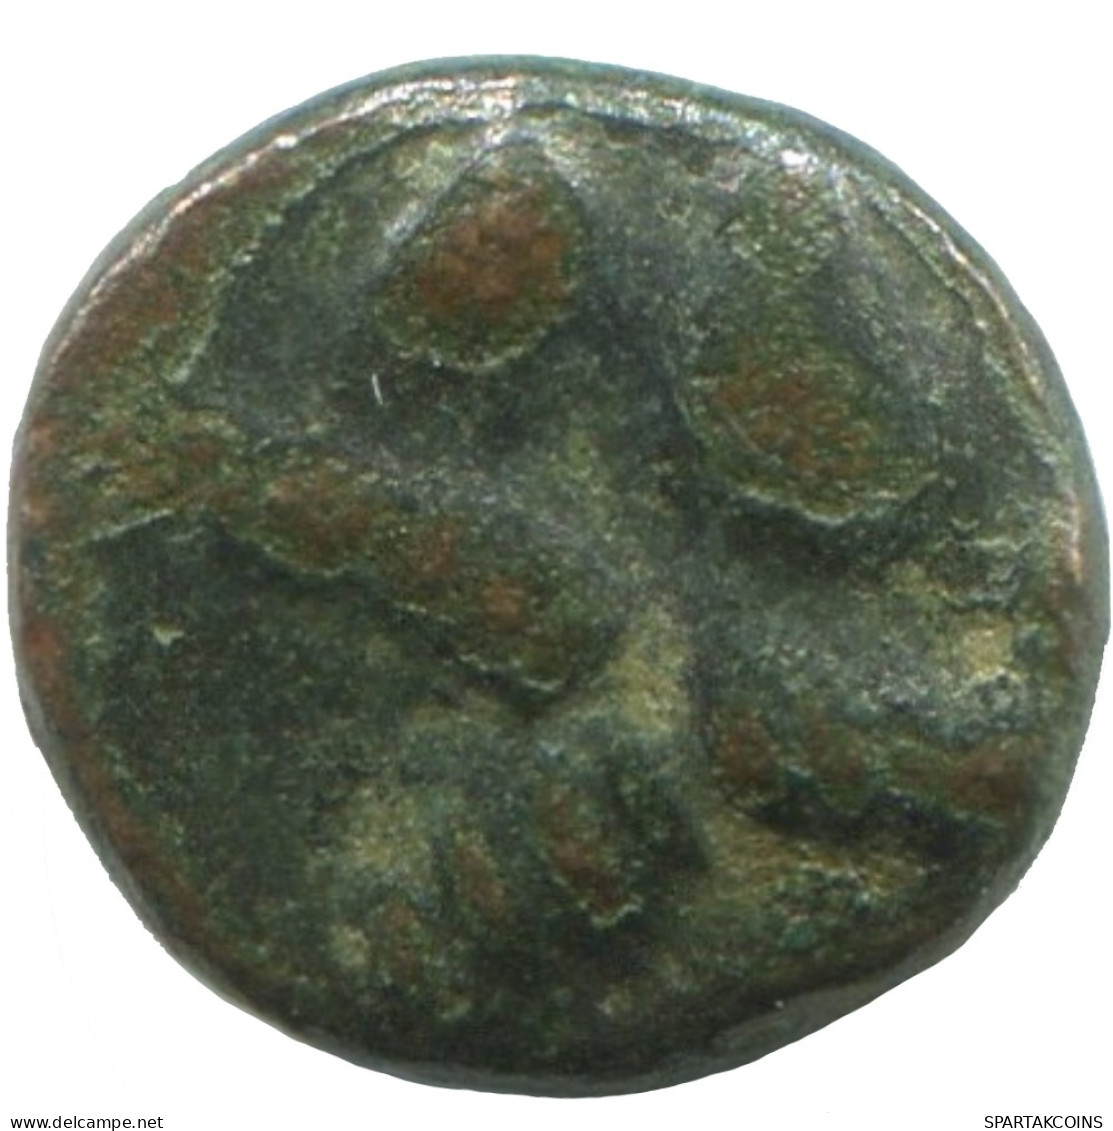 Antiguo GRIEGO ANTIGUO Moneda 0.7g/8mm #SAV1426.11.E.A - Greche